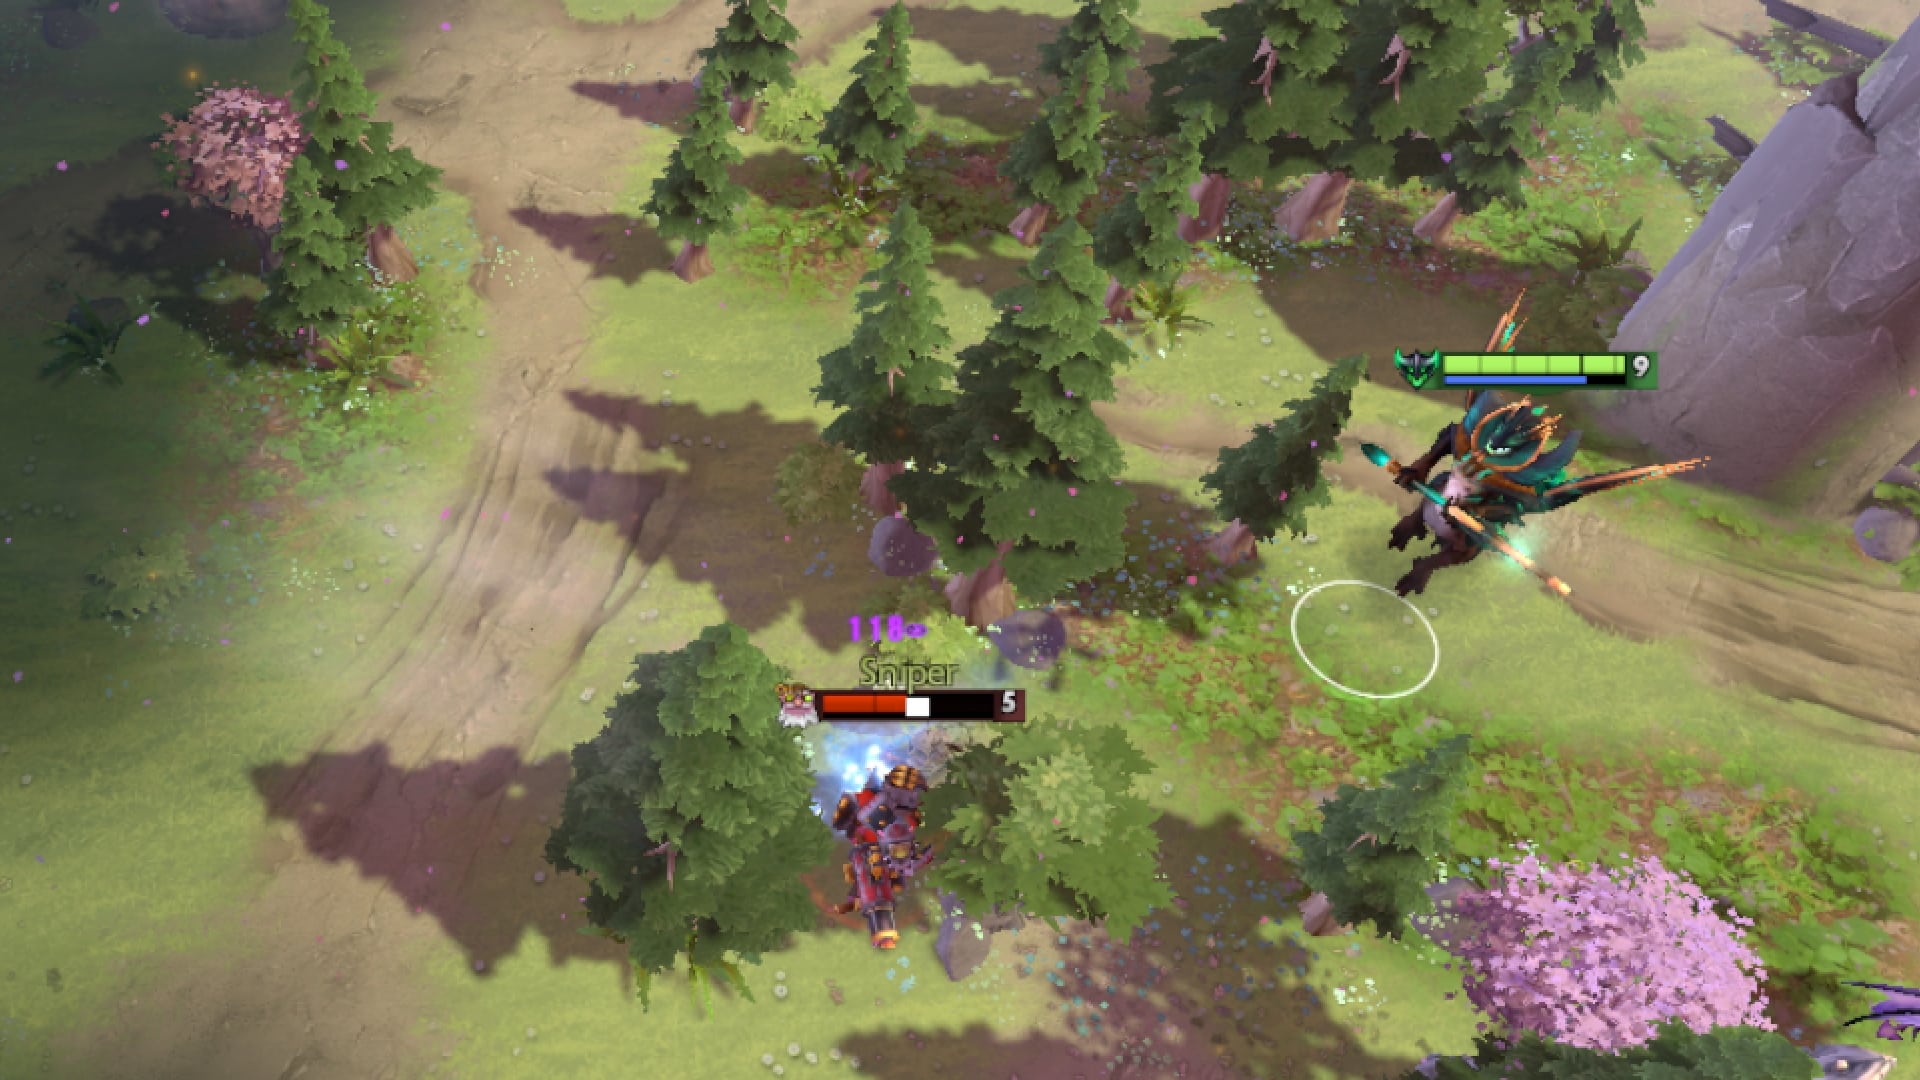 Outworld Destroyer strikes Sniper using Force Staff